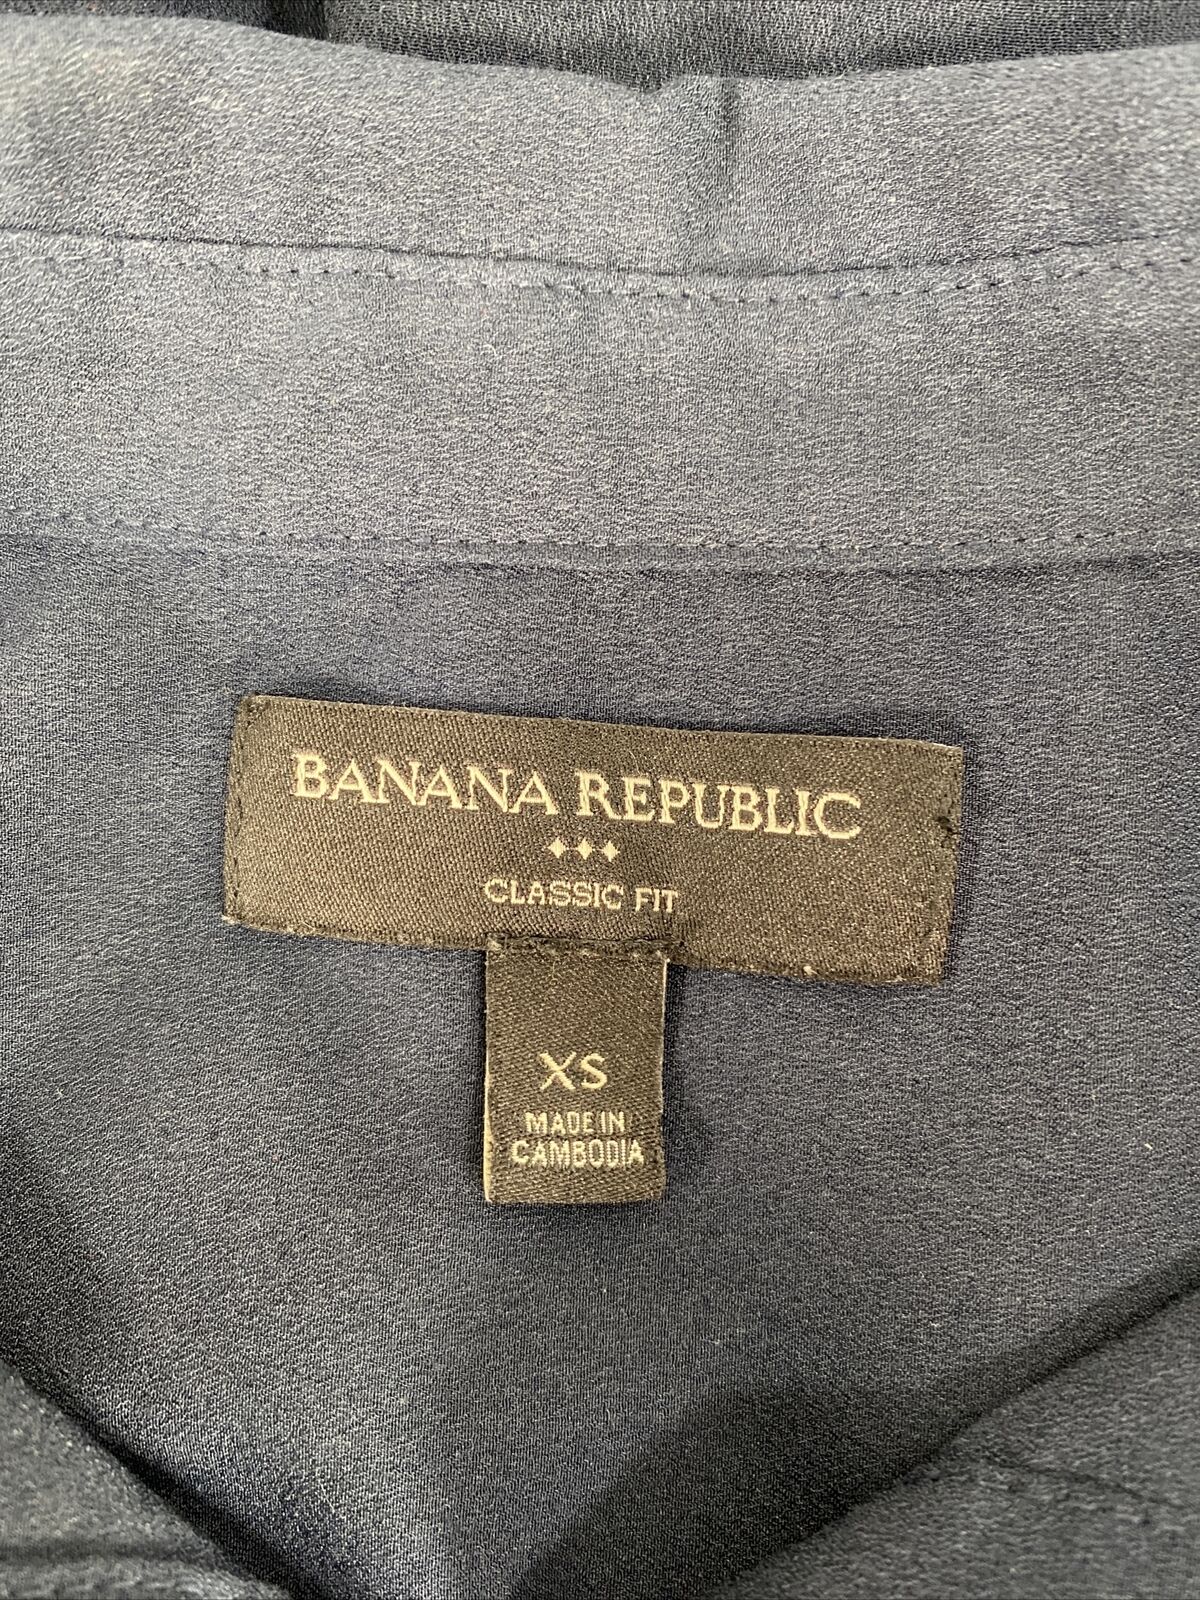 Banana Republic Blusa con botones de ajuste clásico azul marino para mujer - XS